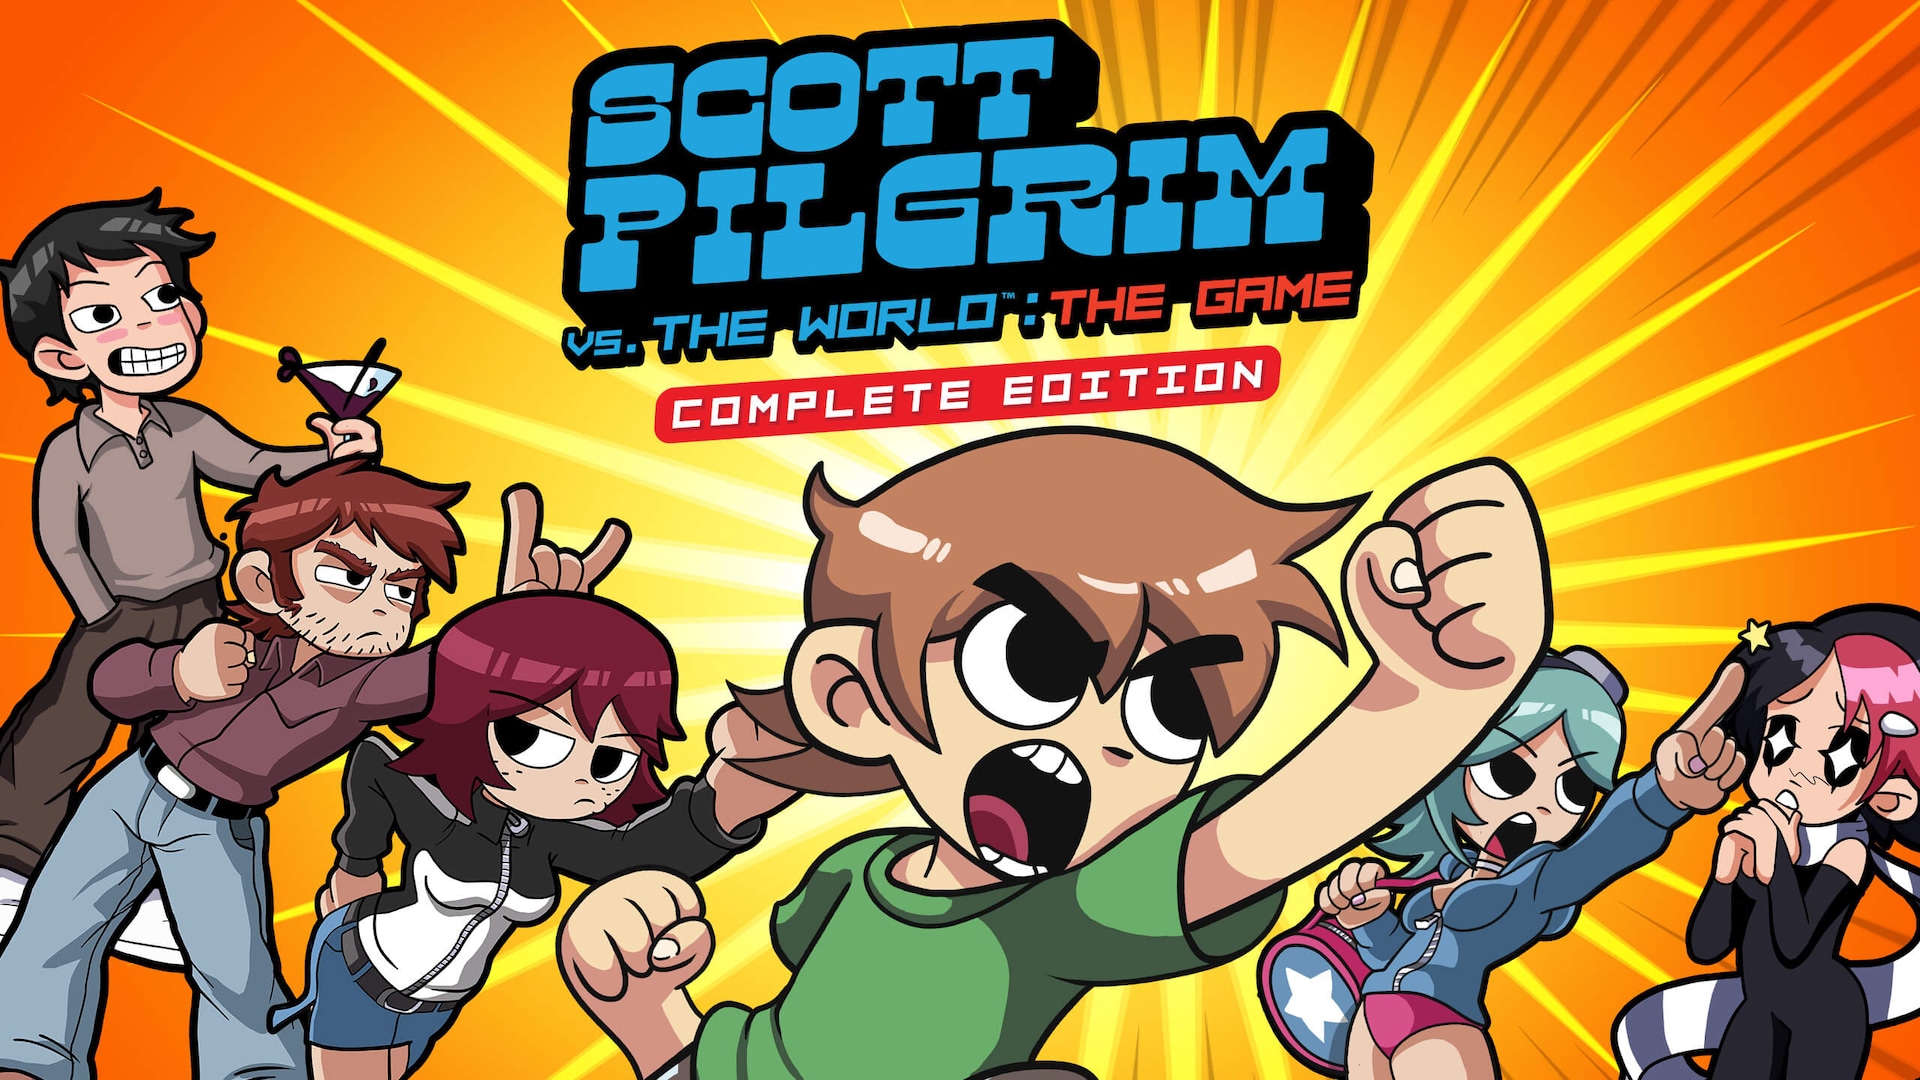 Scott Pilgrim Vs World The Game სრული გამოცემა